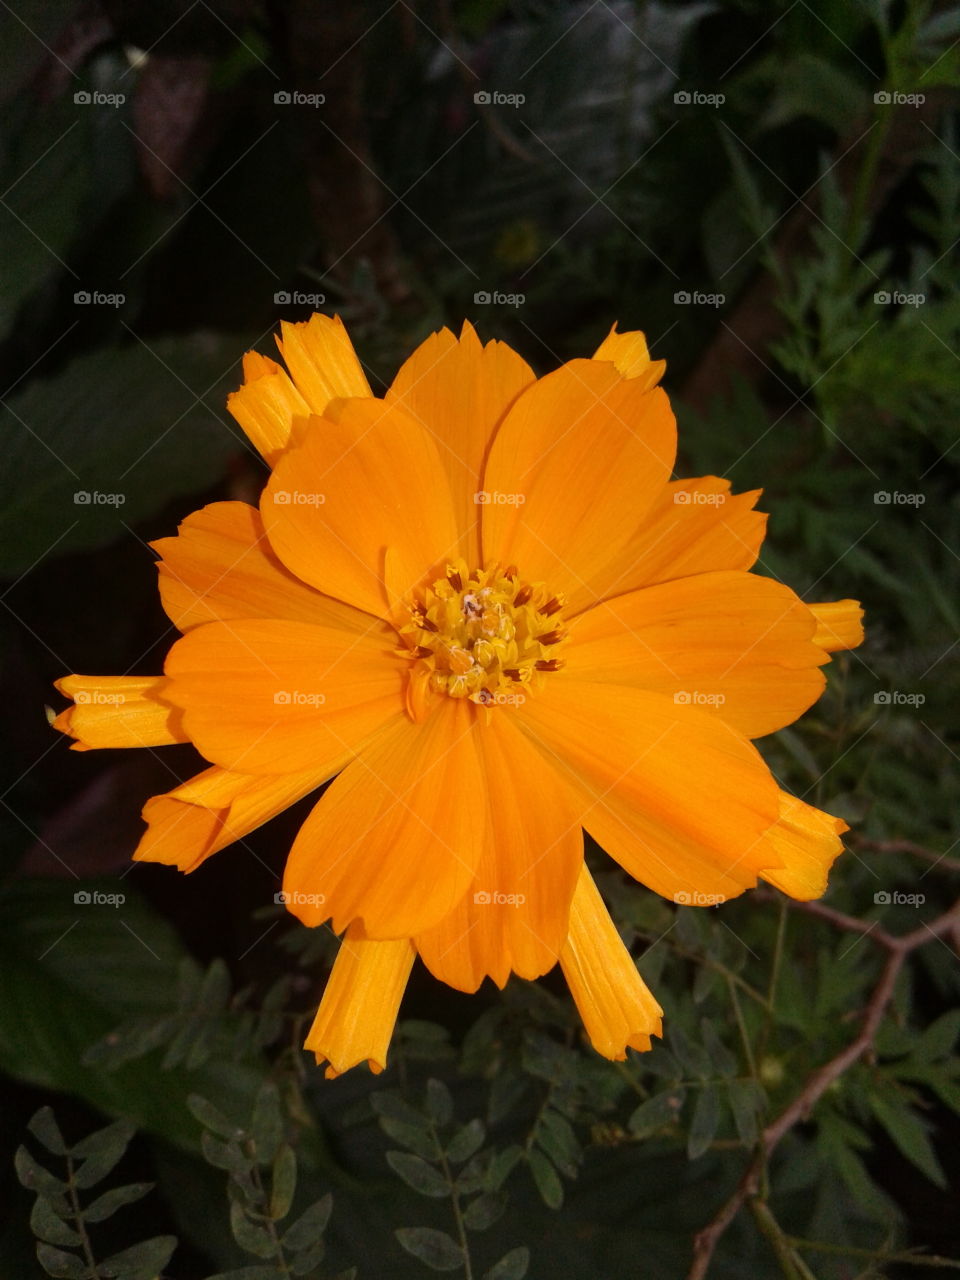 Orange color flower
a lovely flower